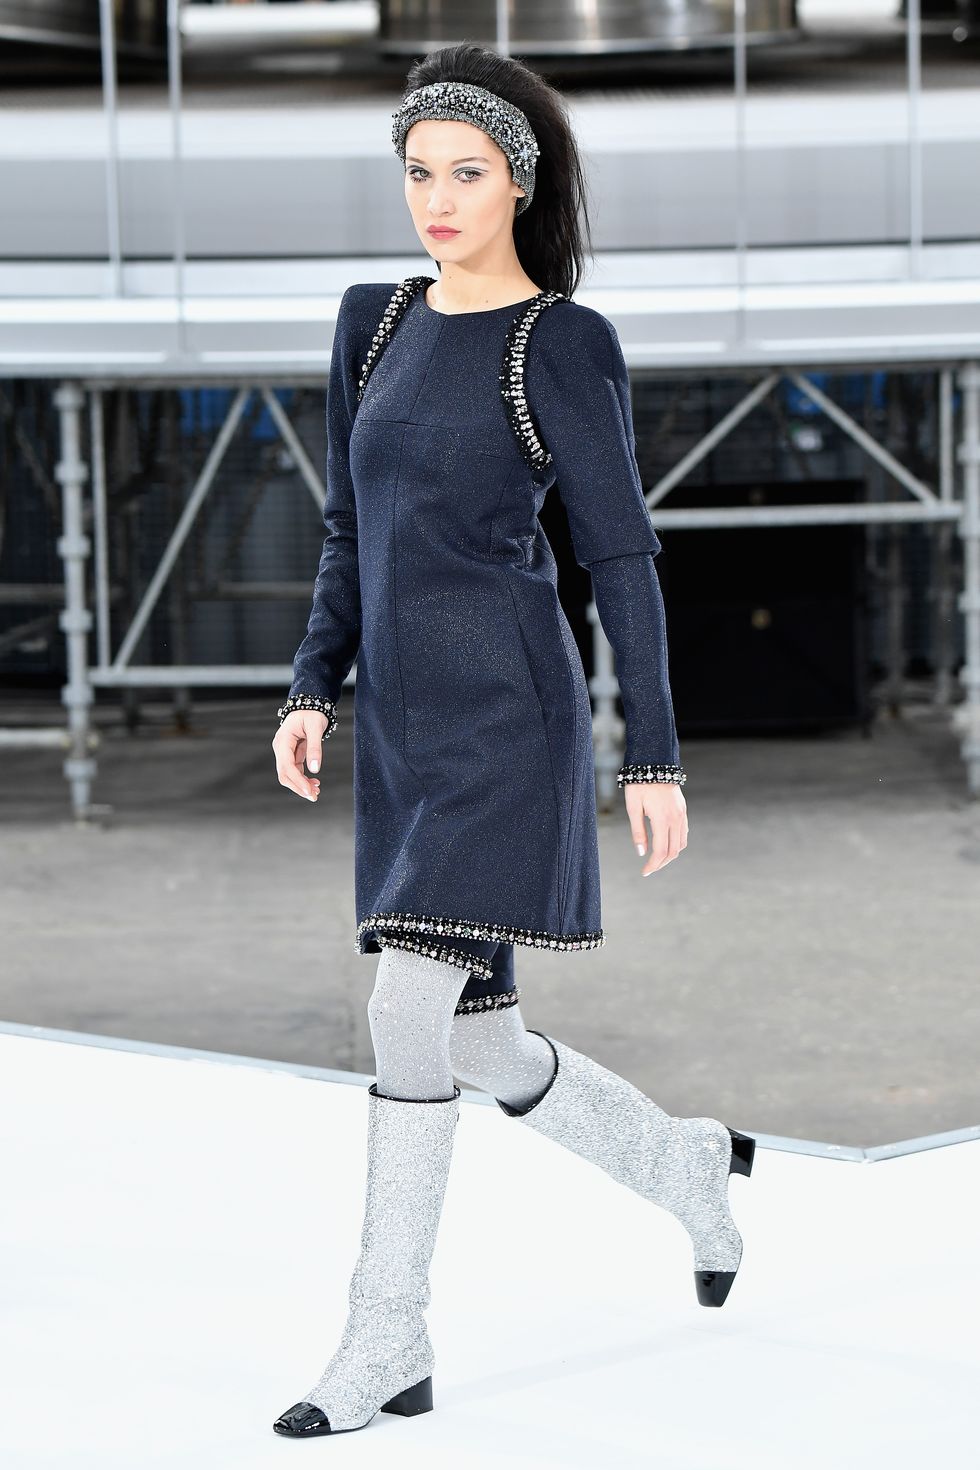 Bella Hadid walks for Chanel AW17